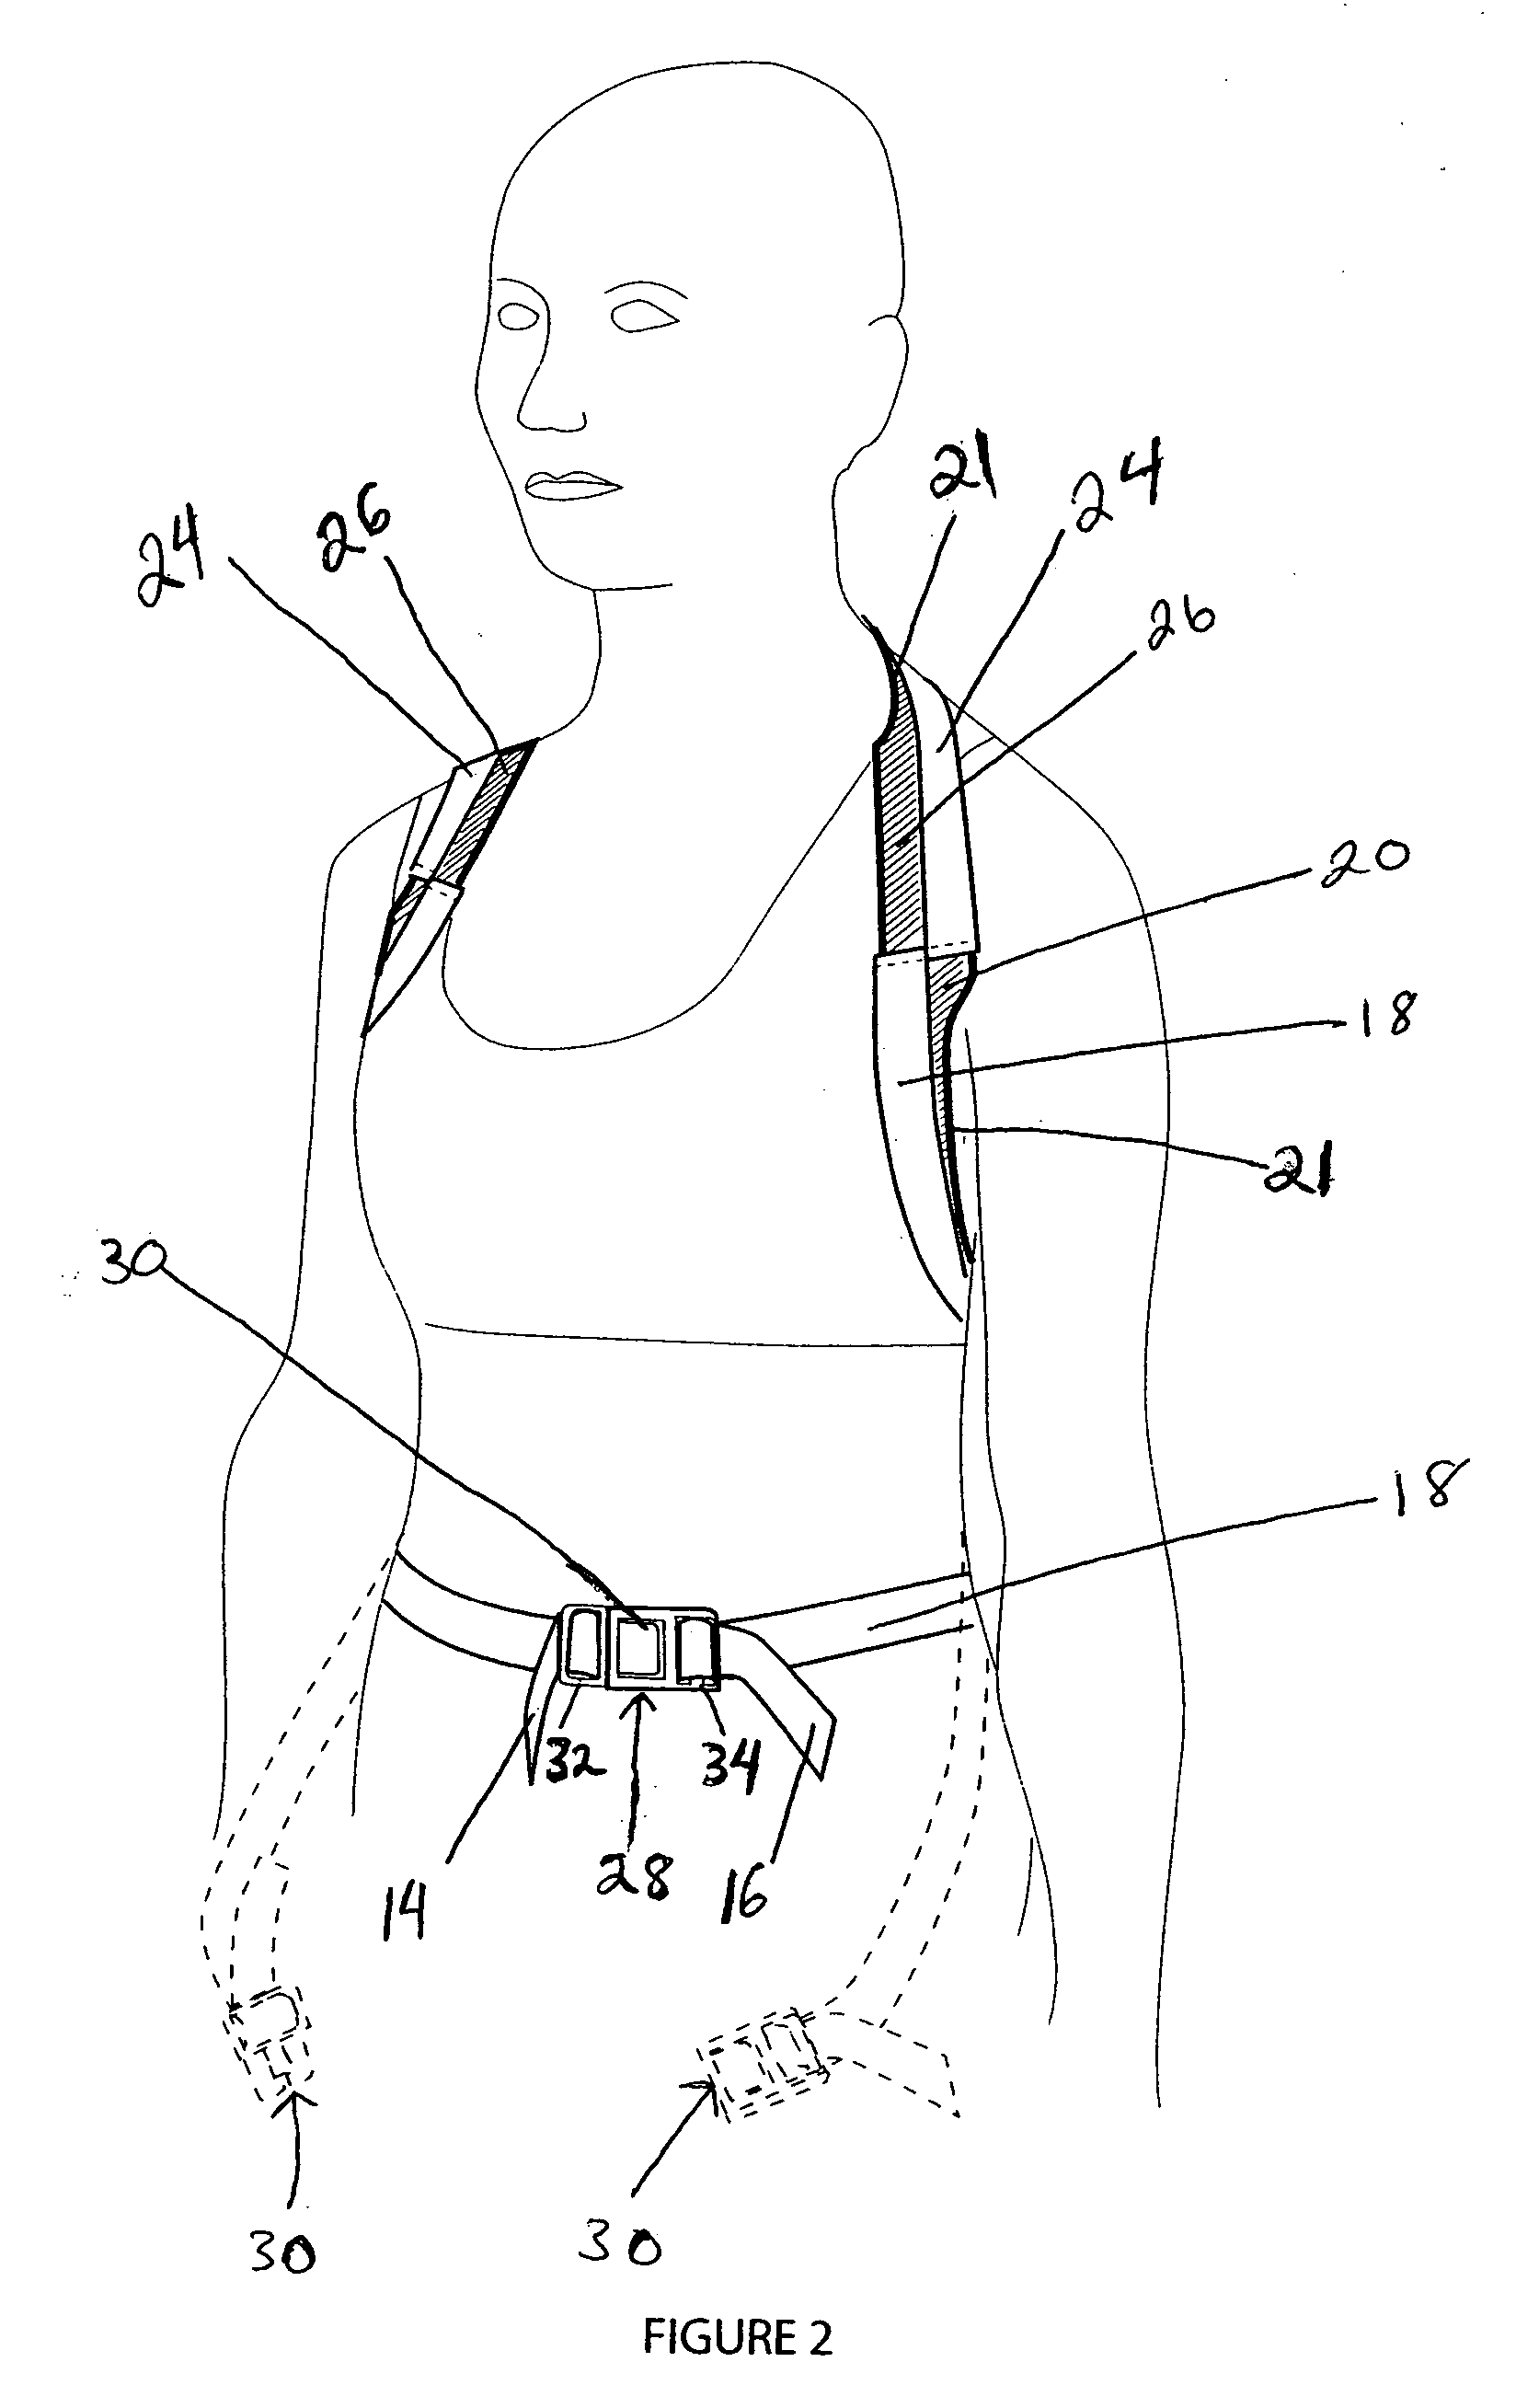 Posture band and method of improving posture